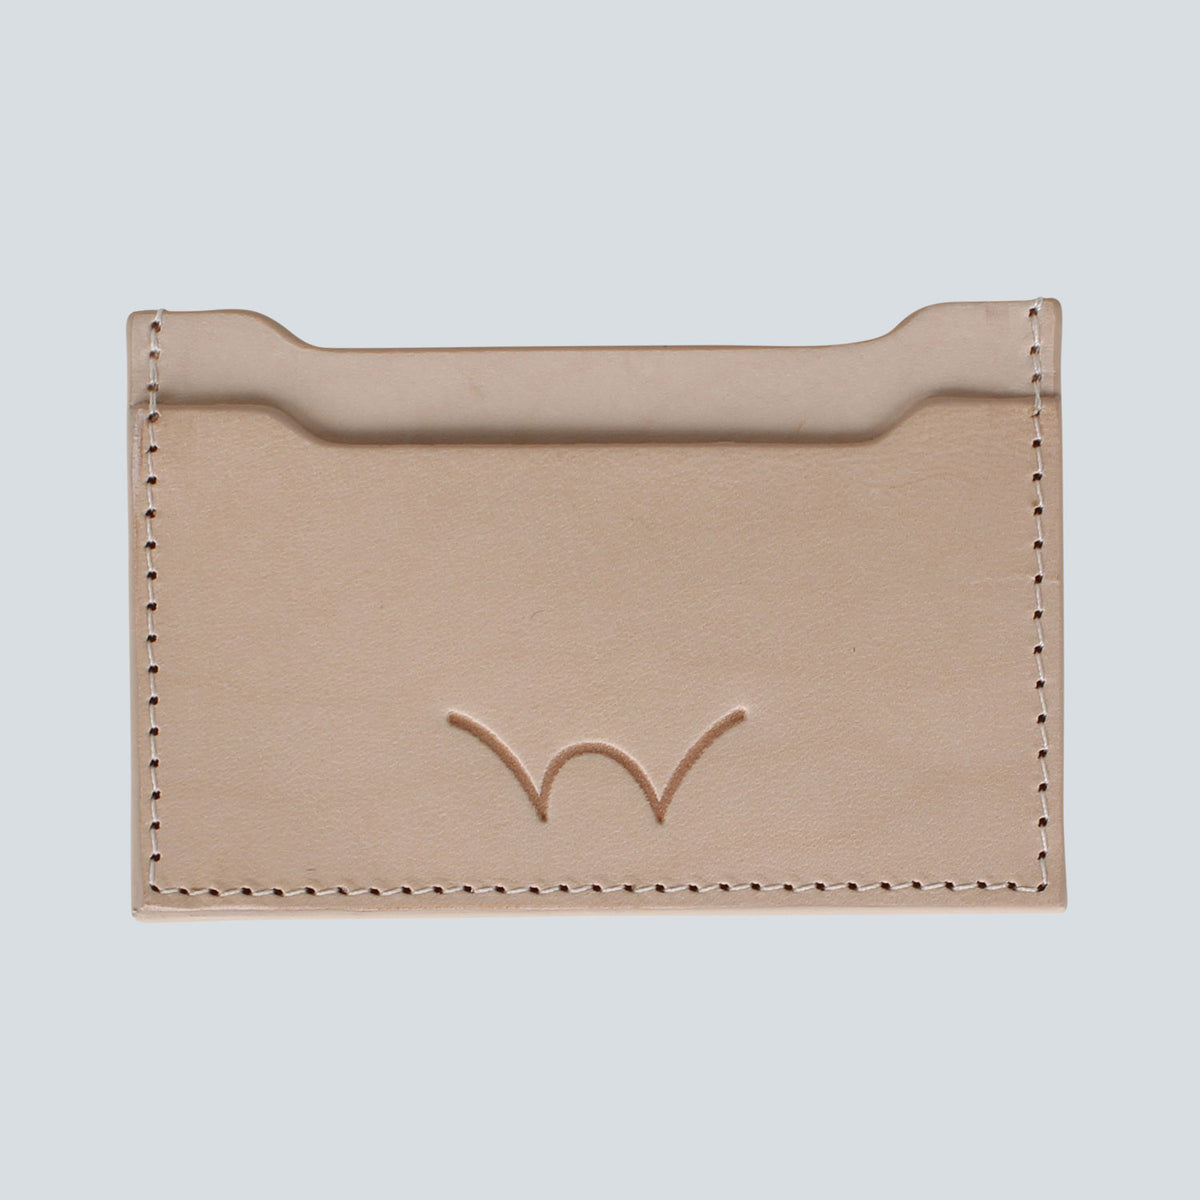 Edwin - Italian Leather Cardholder - Nude